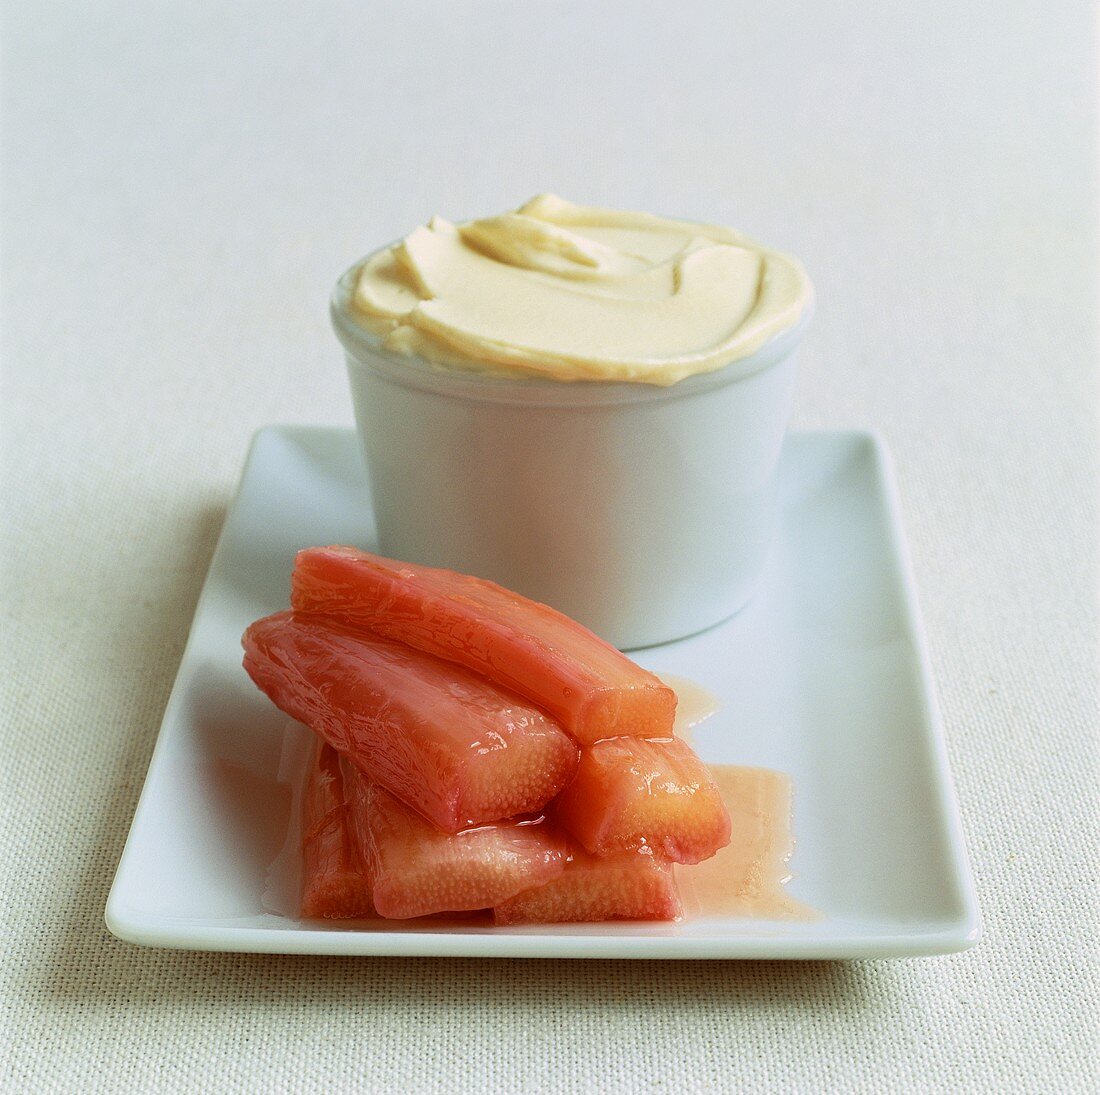 Rhubarb with cream